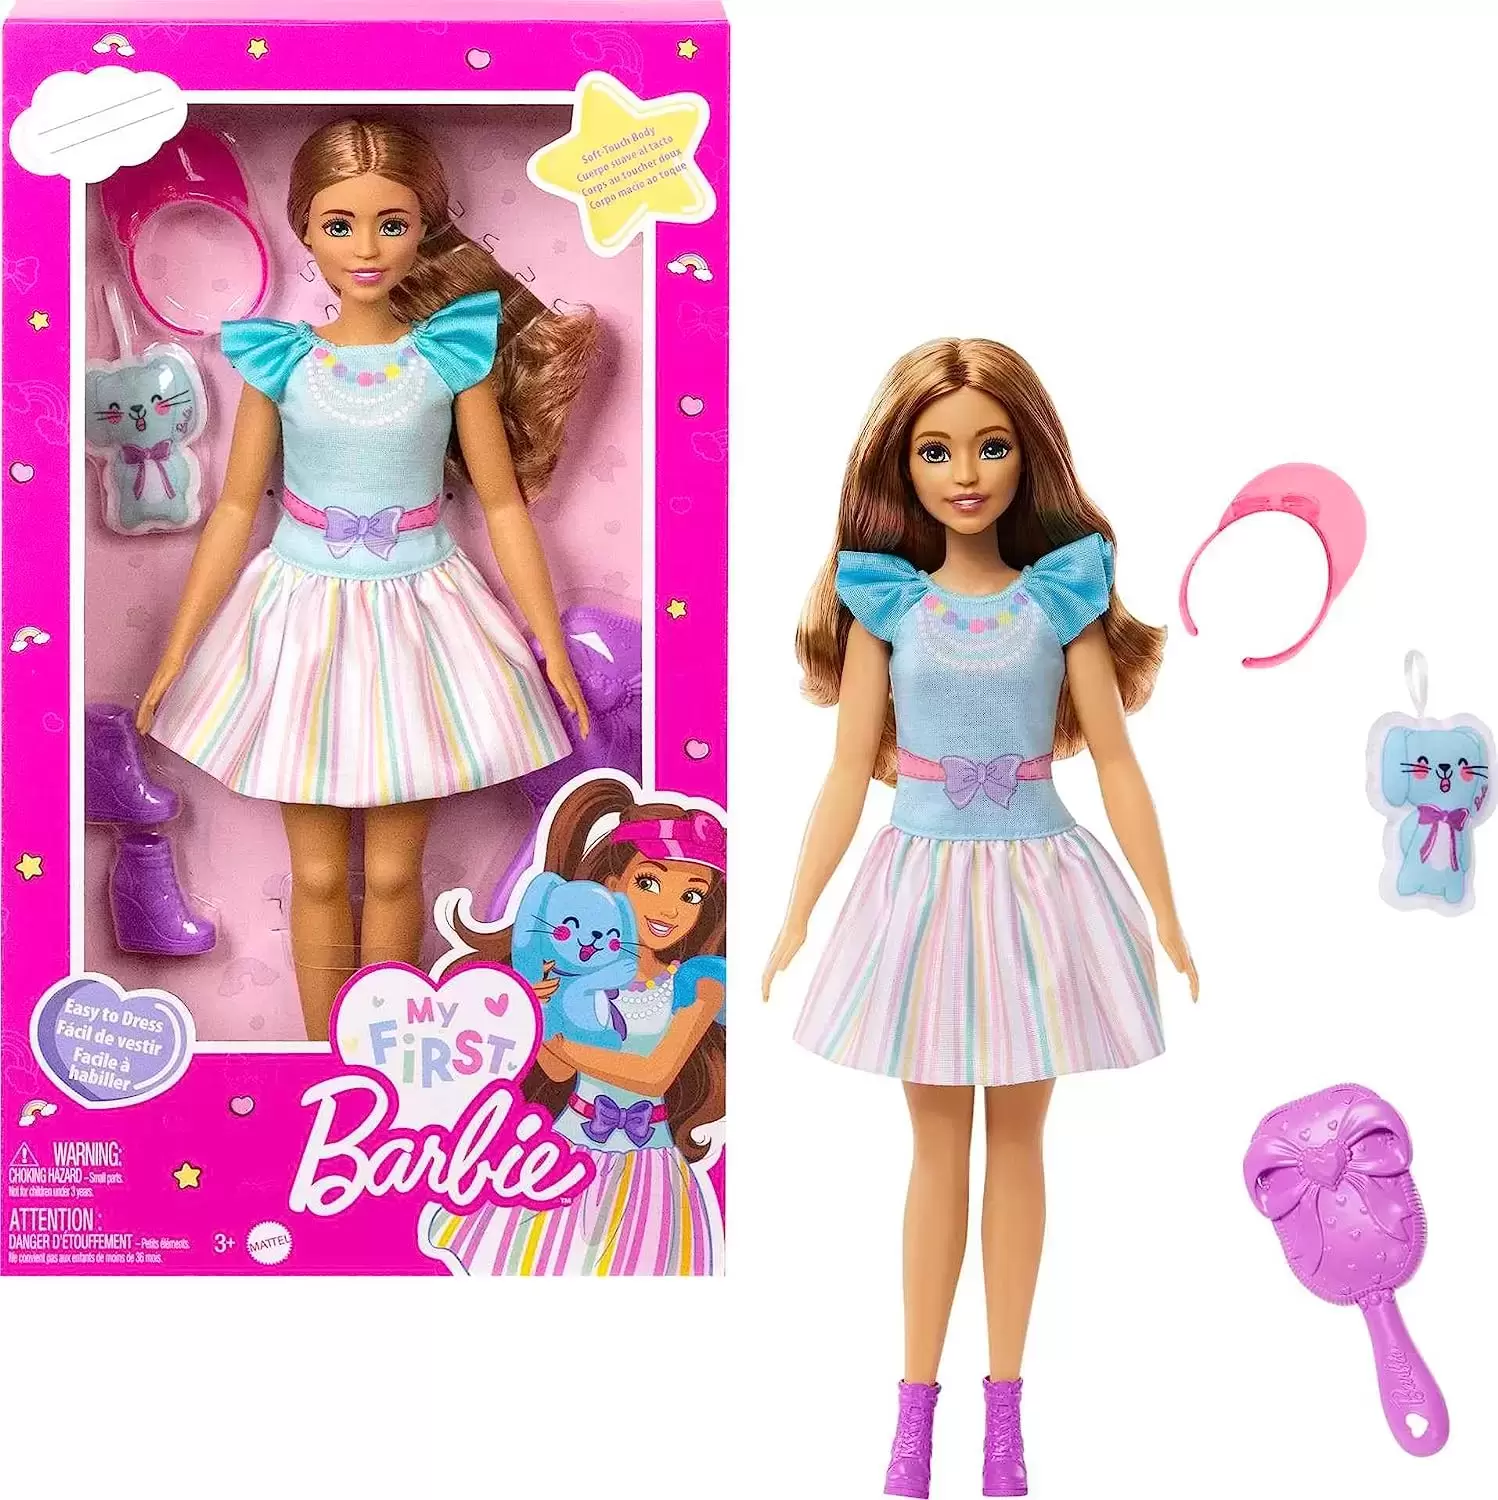 https://www.coleka.com/media/item/202307/20/my-first-barbie-2023-teresa.webp